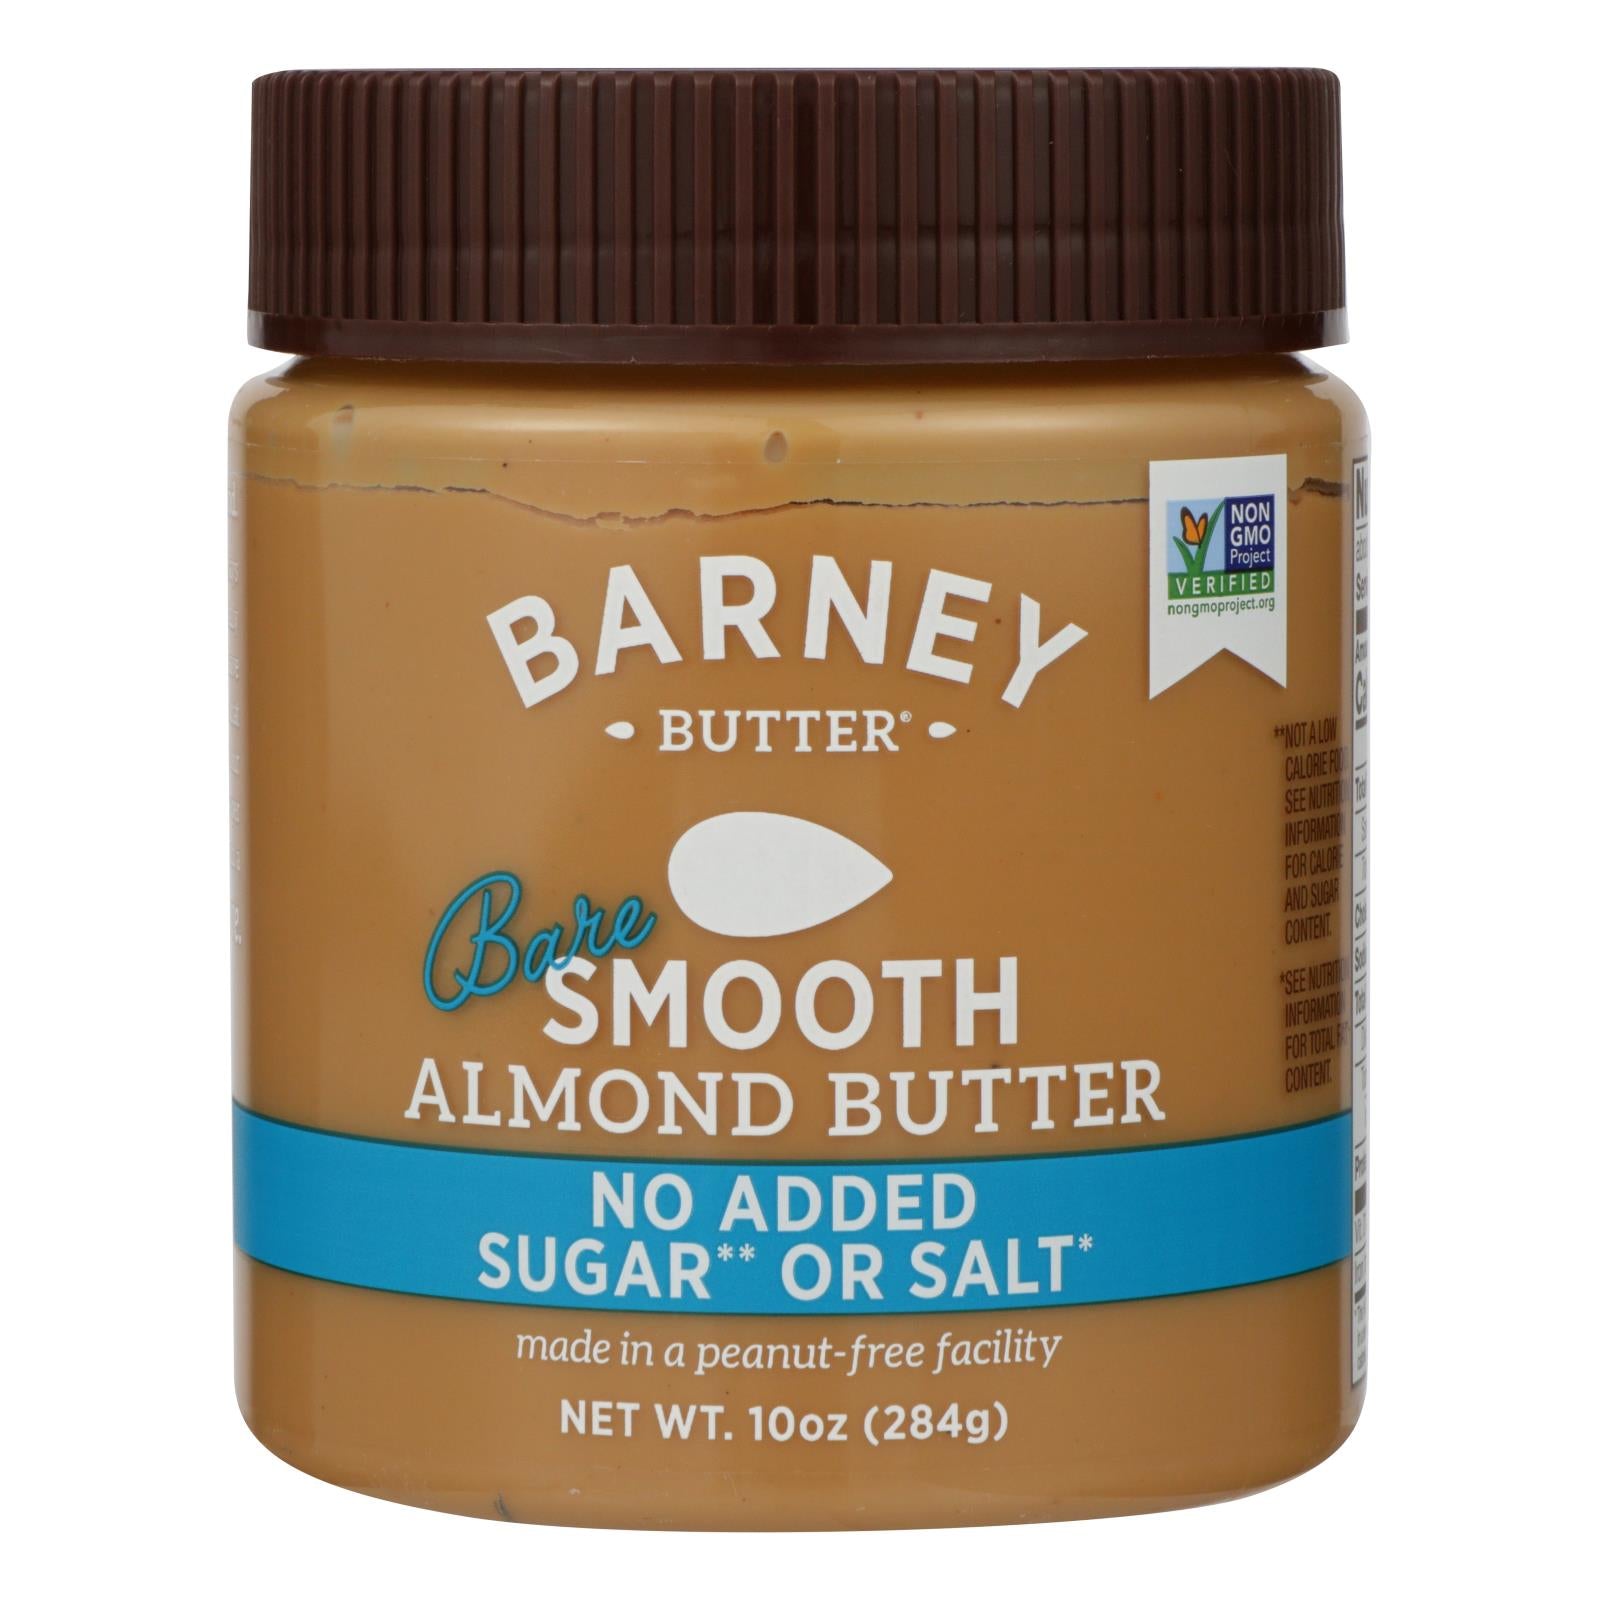 Barney Butter, Barney Butter - Almond Butter - Bare Smooth - Case of 6 - 10 oz. (Pack of 6)